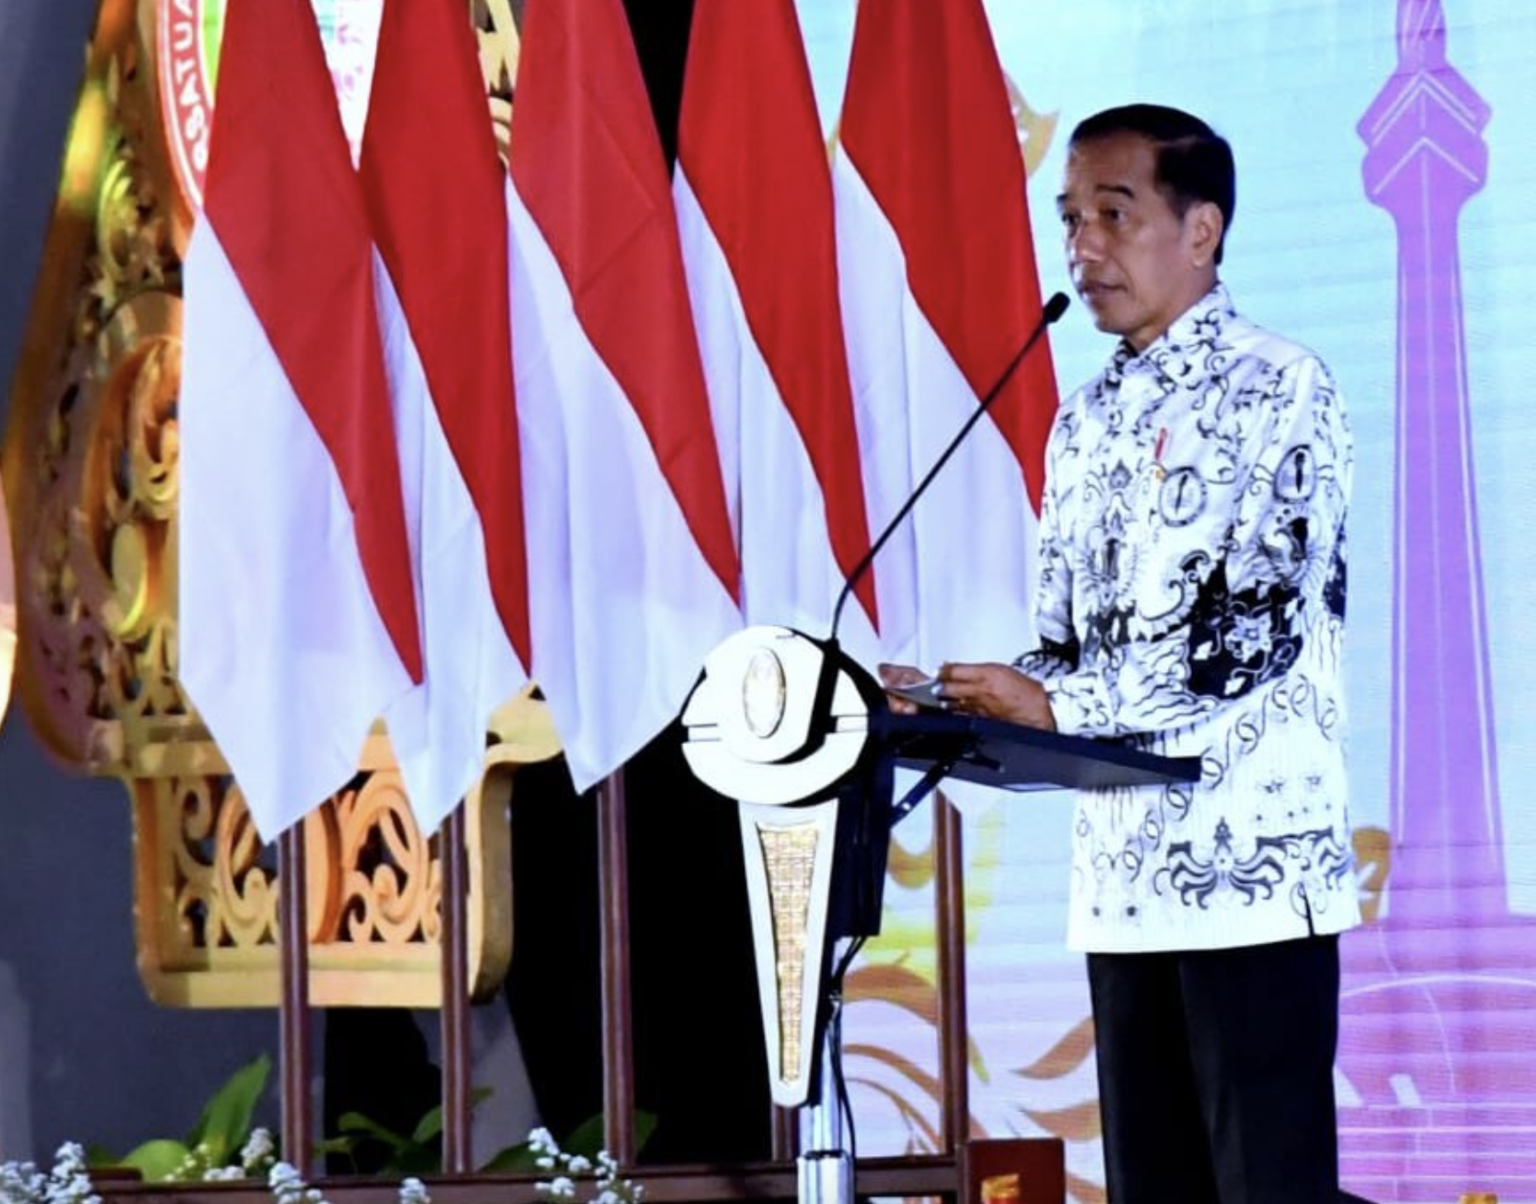 Presiden Jokowi menghadiri Puncak Peringatan Hari Ulanng Tahun (HUT) ke-77 Persatuan Guru Republik Indonesia dan Hari Guru Nasional di Semarang, Jawa Tengah